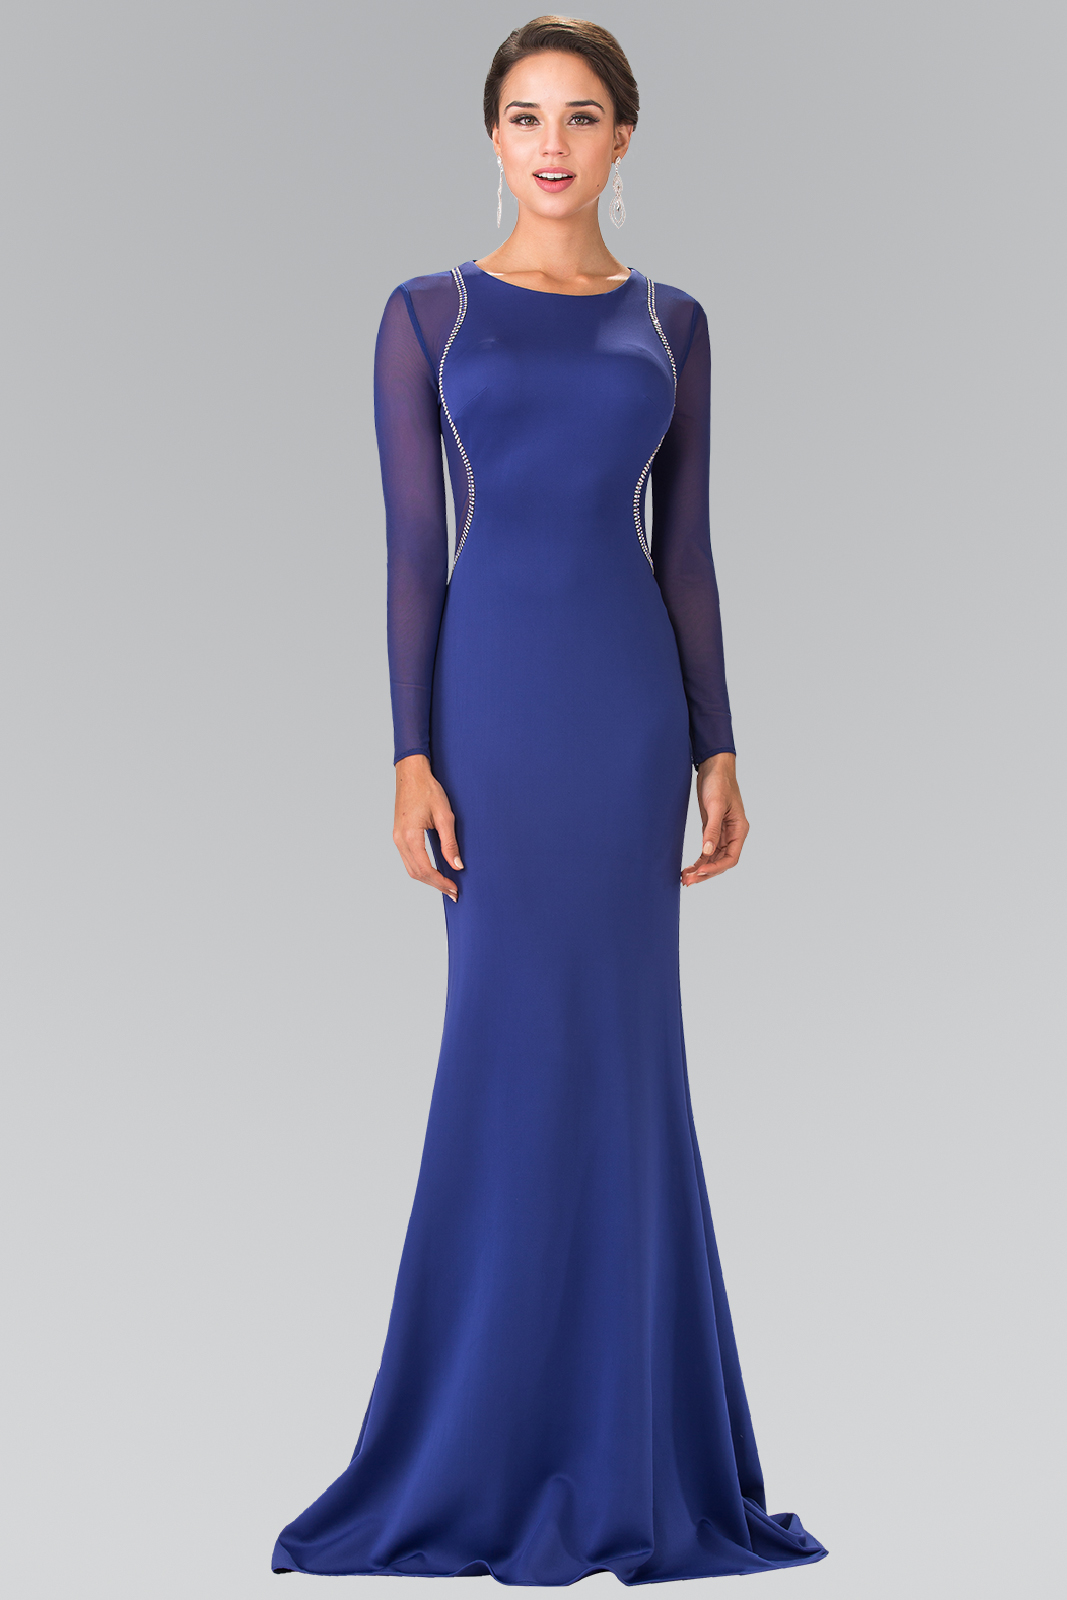 royal blue chiffon aline prom dress